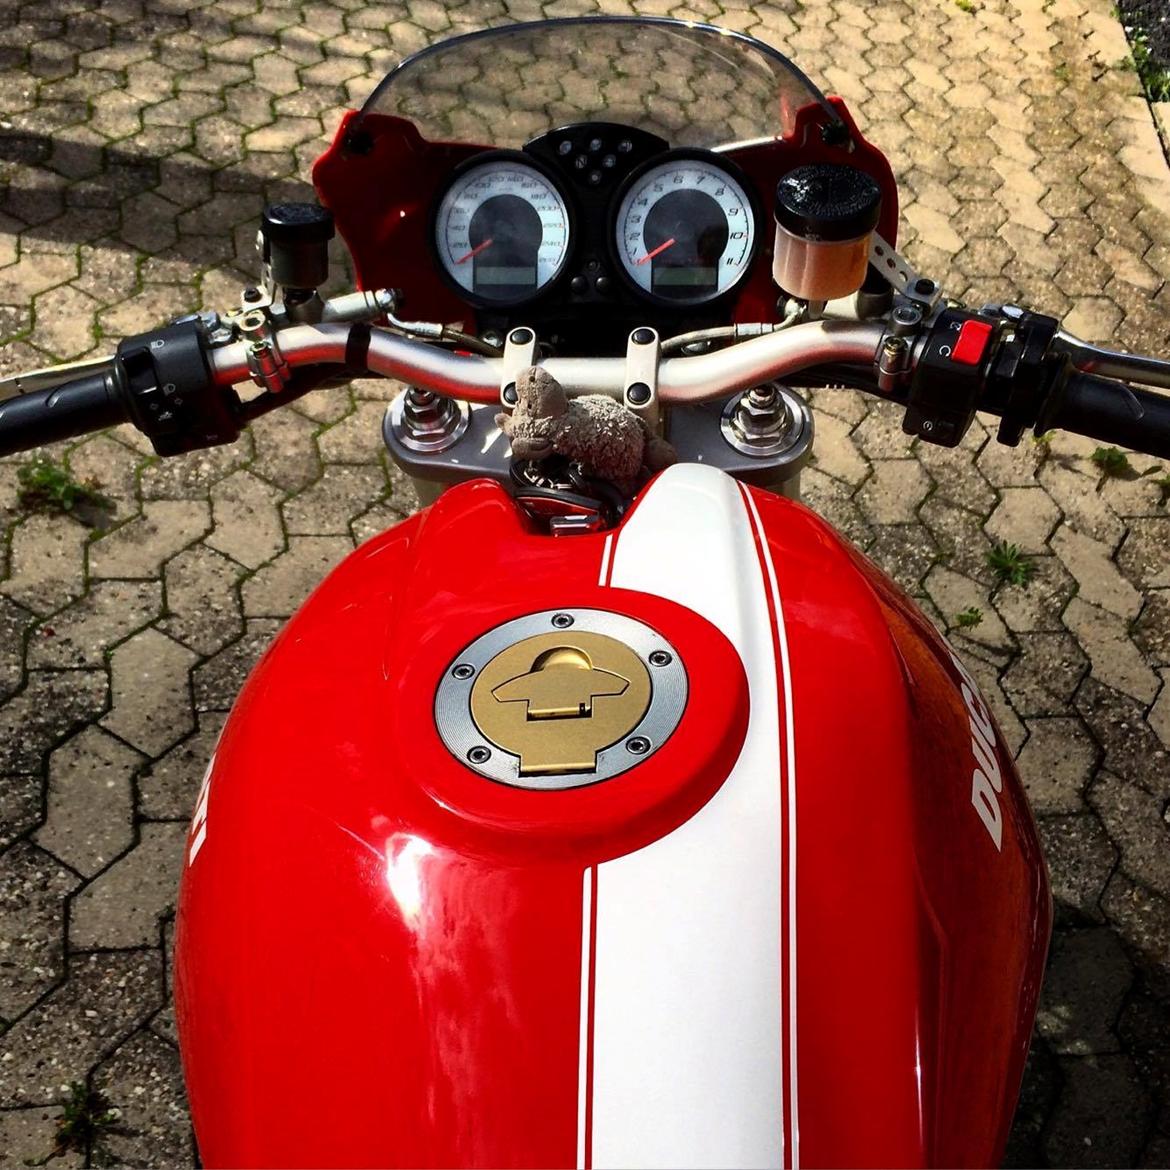 Ducati Monster S2R 1000 billede 2